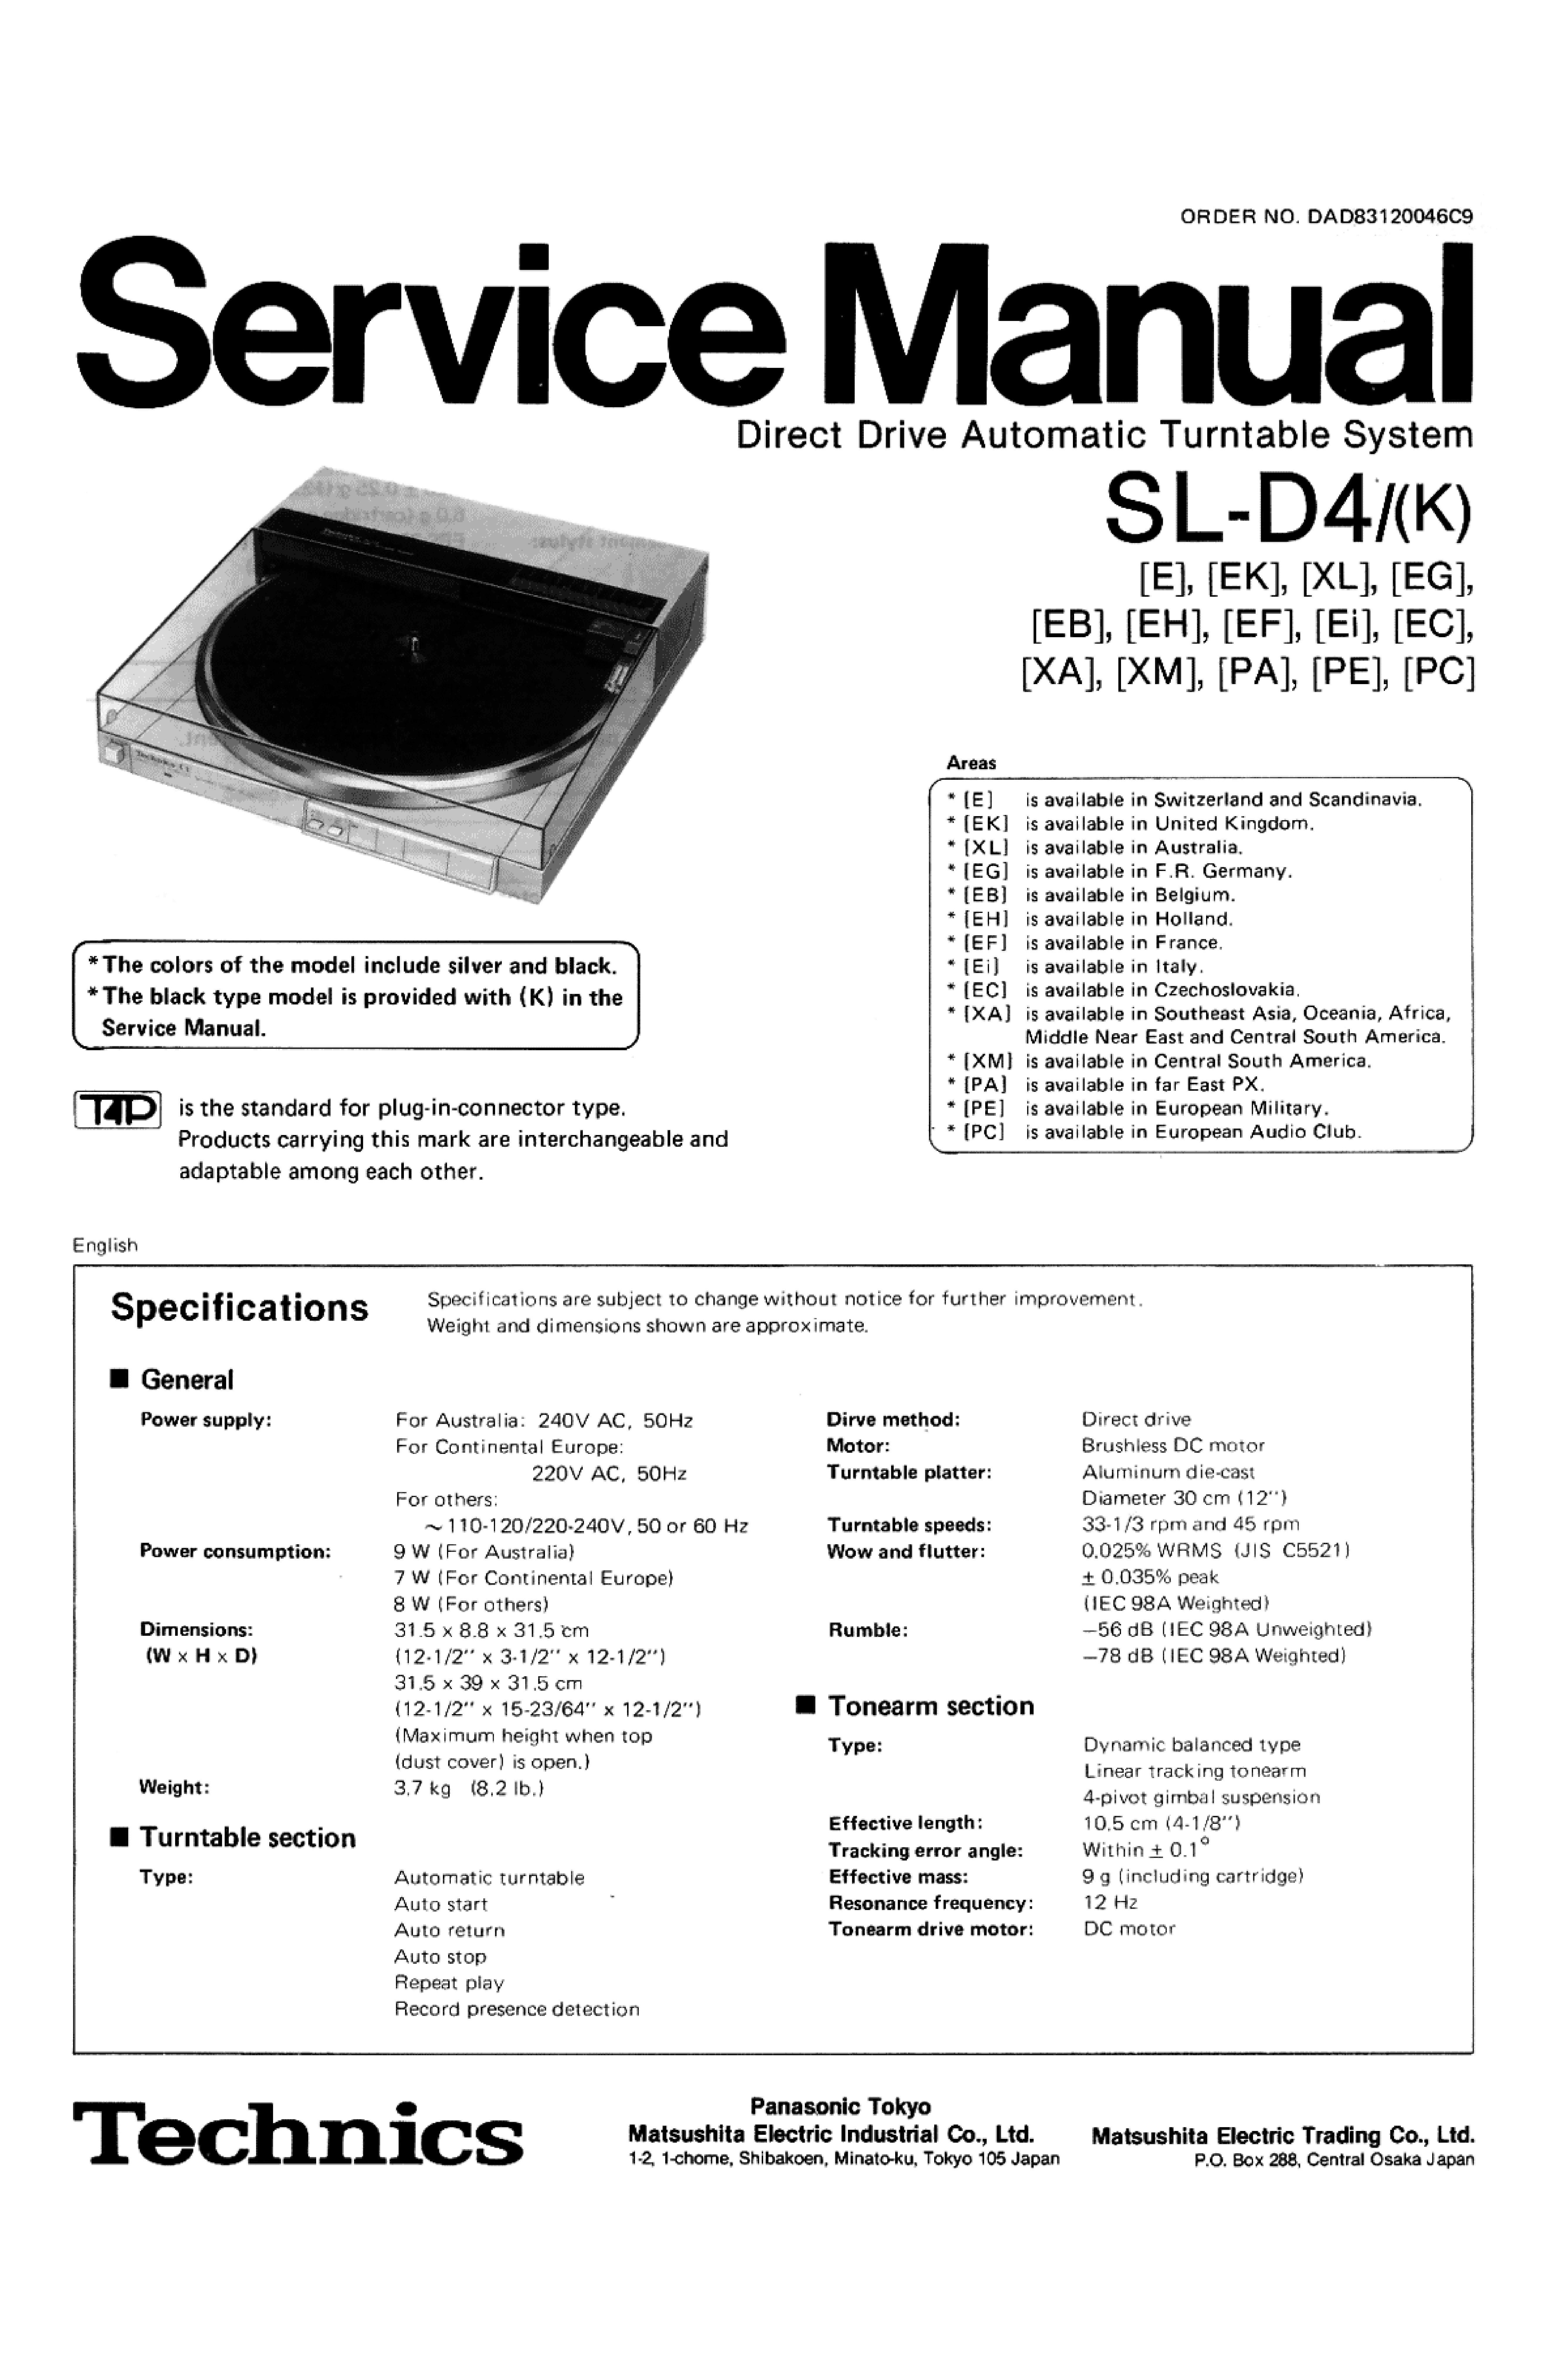 TECHNICS SL-D4K - Service Manual Immediate Download